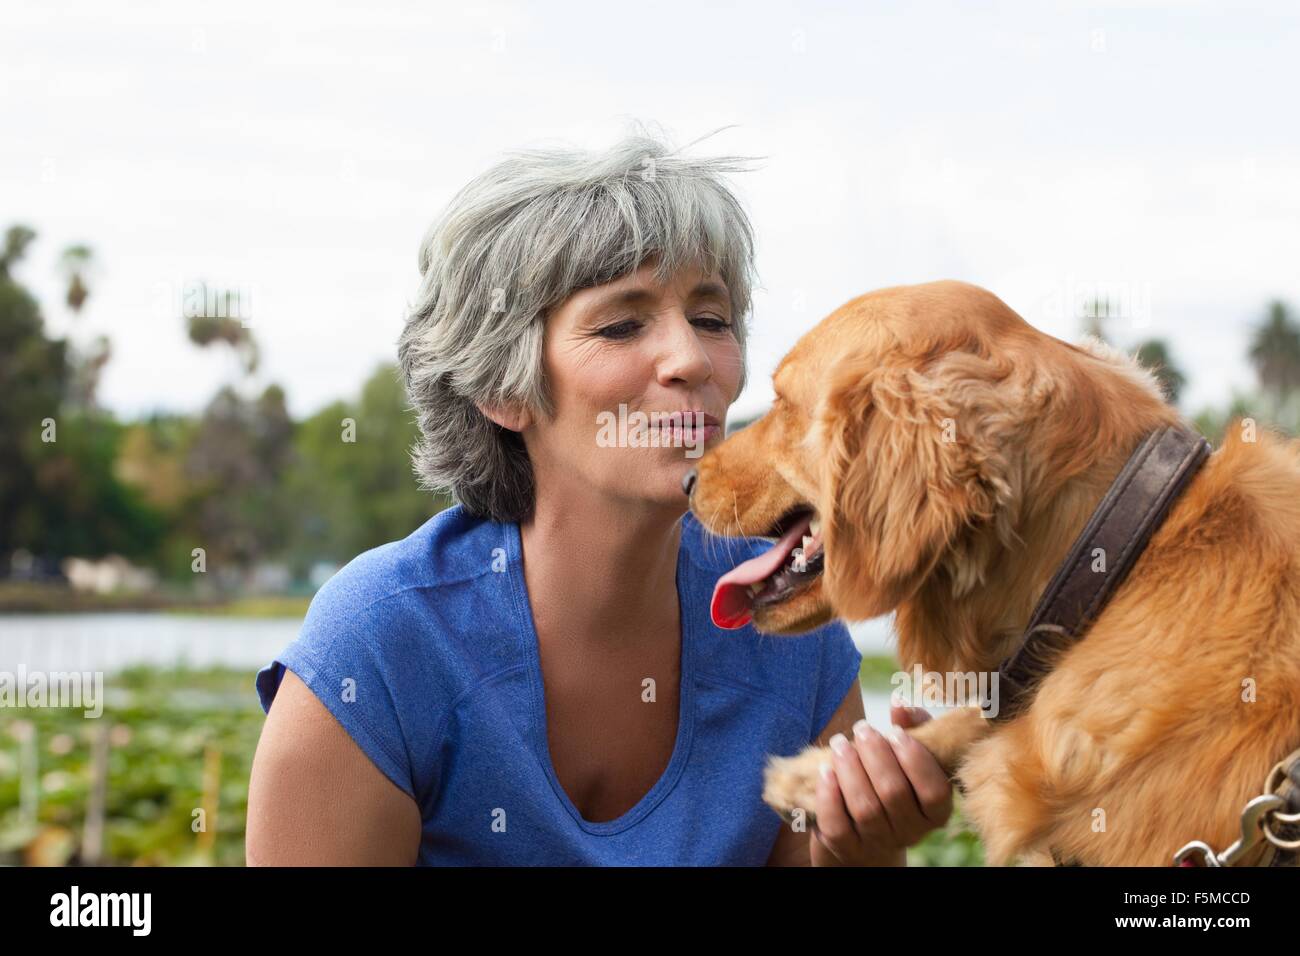 Mature woman petting dog, outdoors Stock Photo